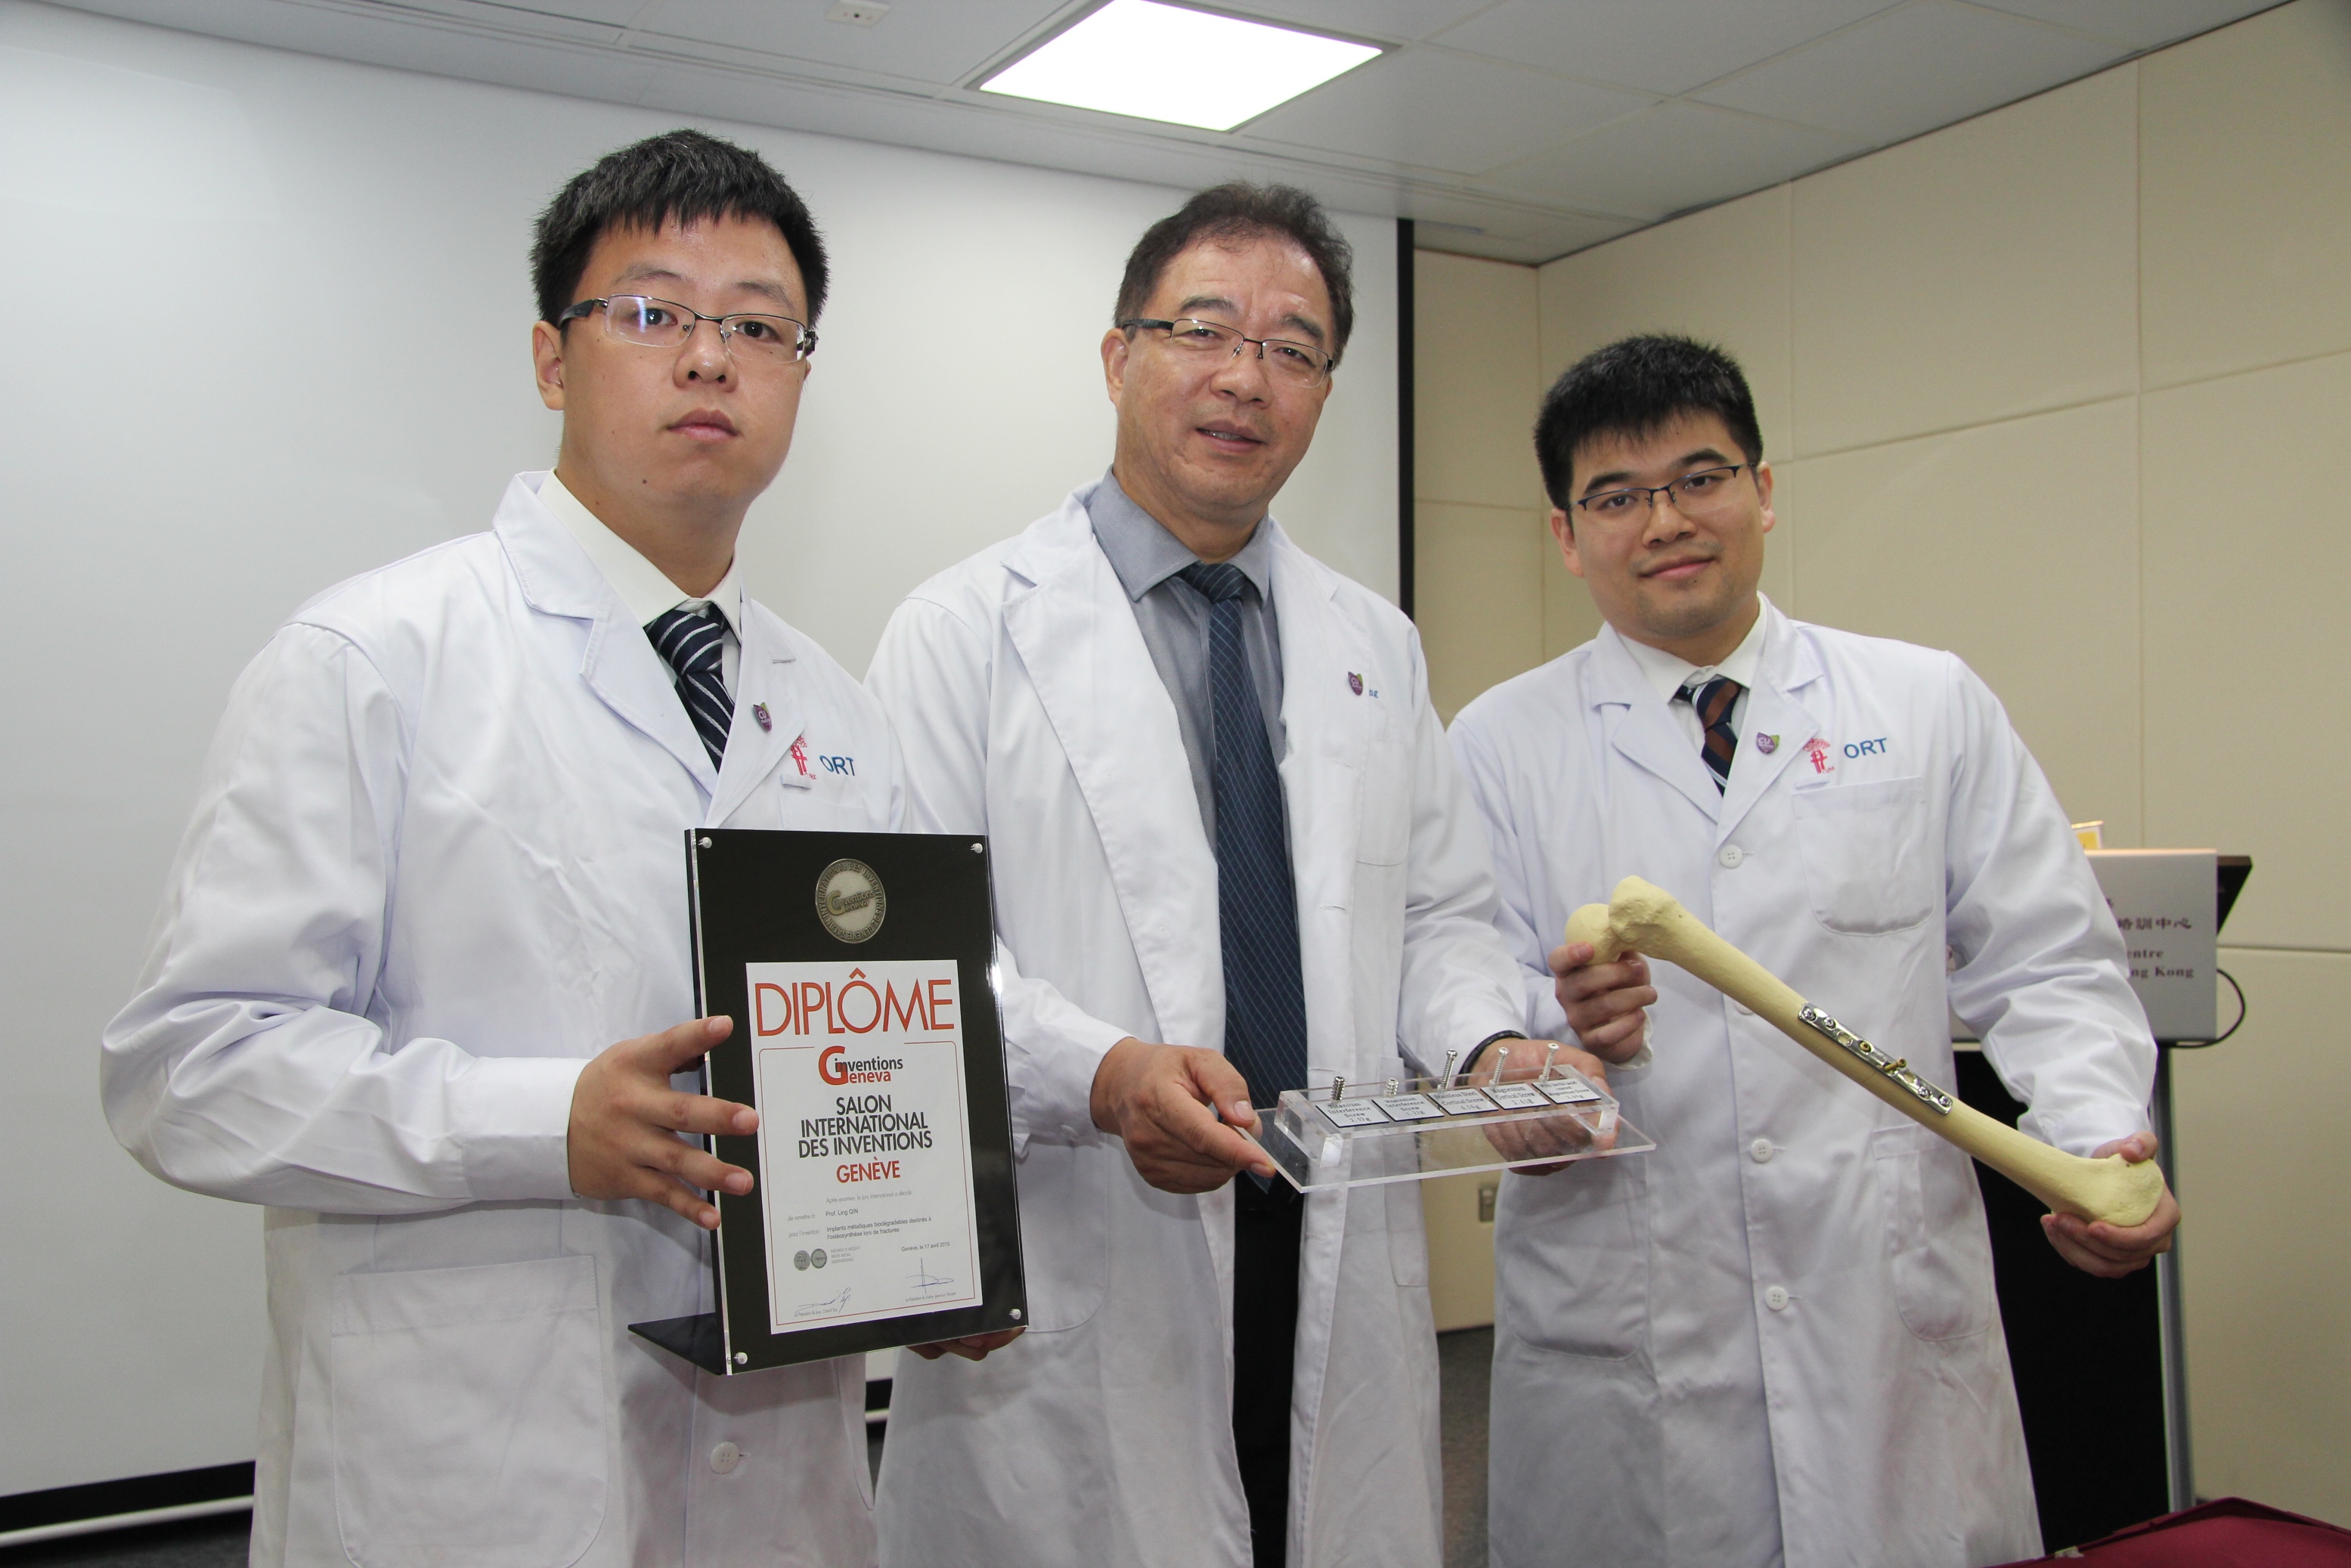 Dr. Tian Li, Prof. Qin Ling and Dr. Chow Ho Kiu